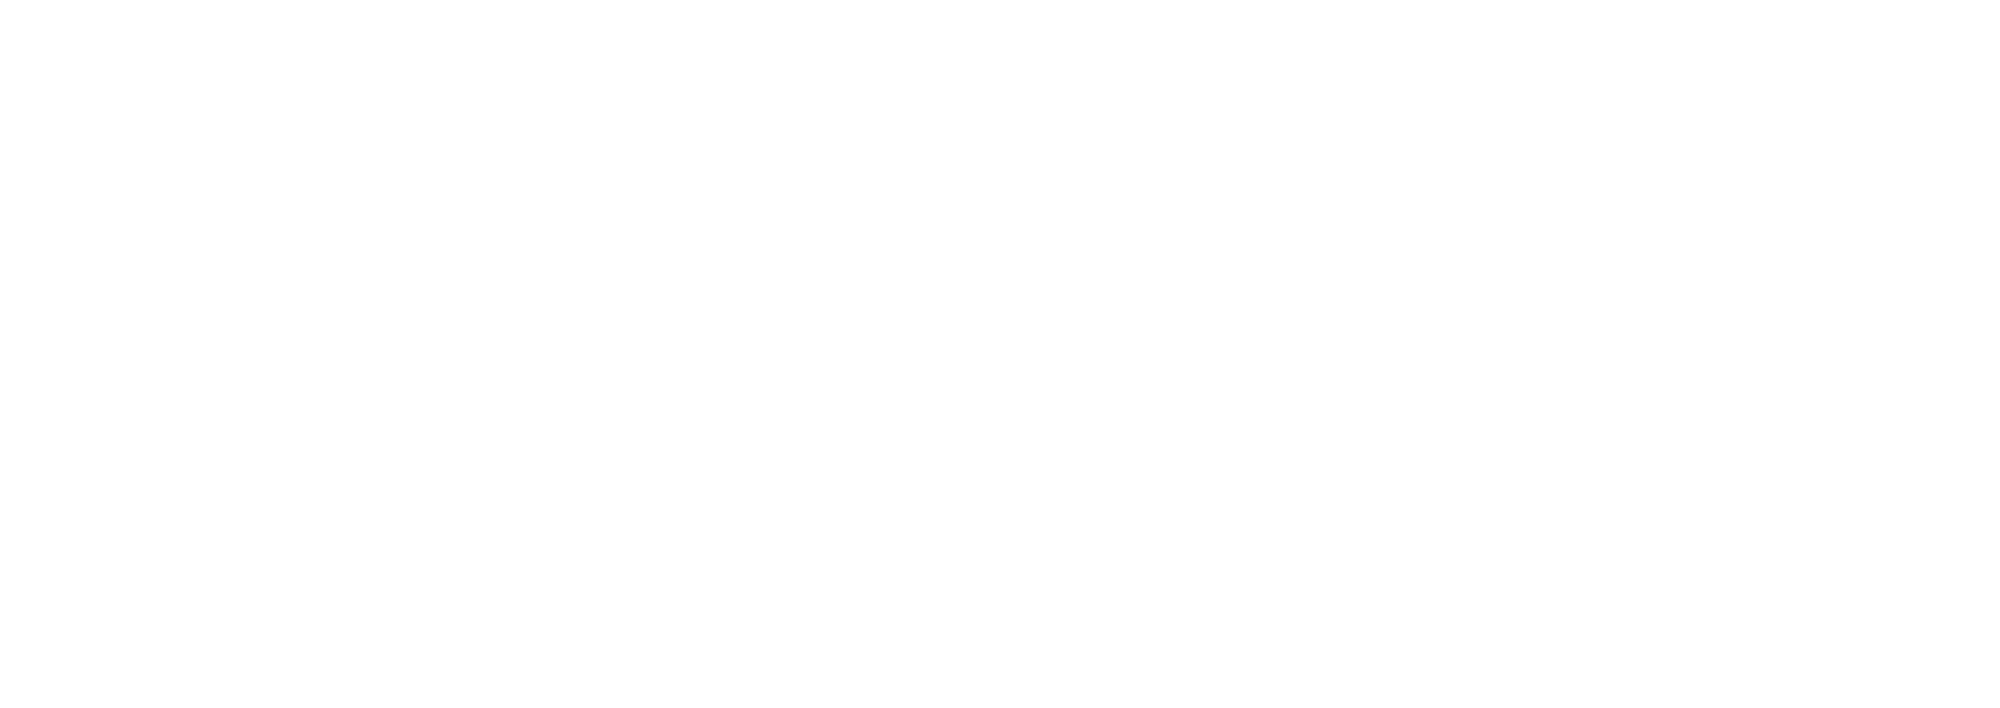 HYPOALLERGENIC-logo-white (1).png